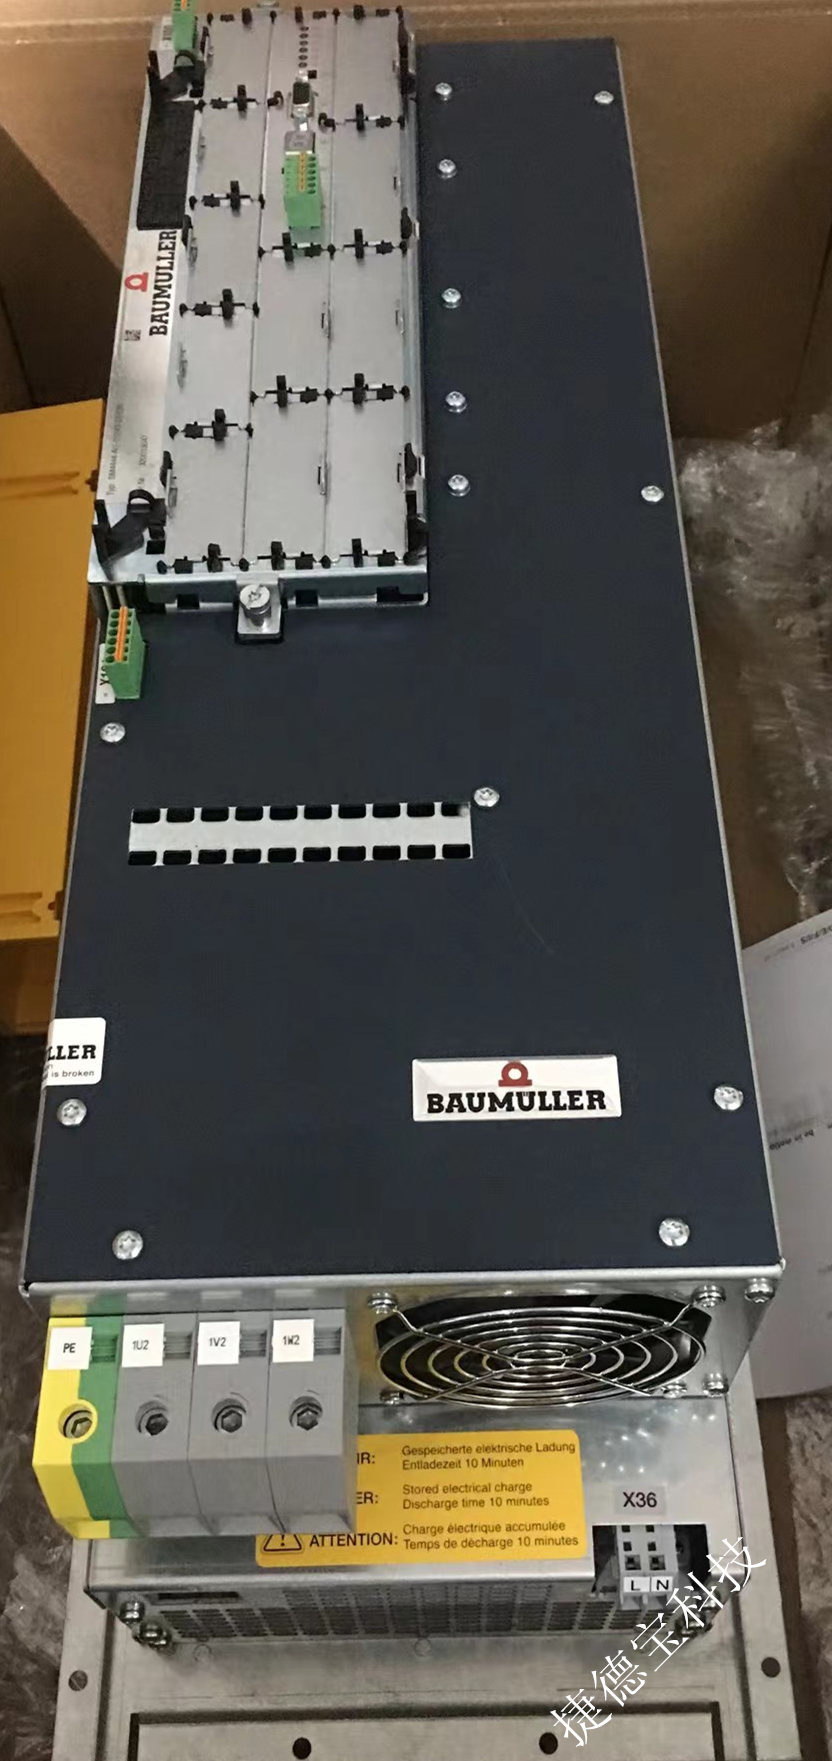 BAUMUELLER伺服驱动器F084维修检测说明